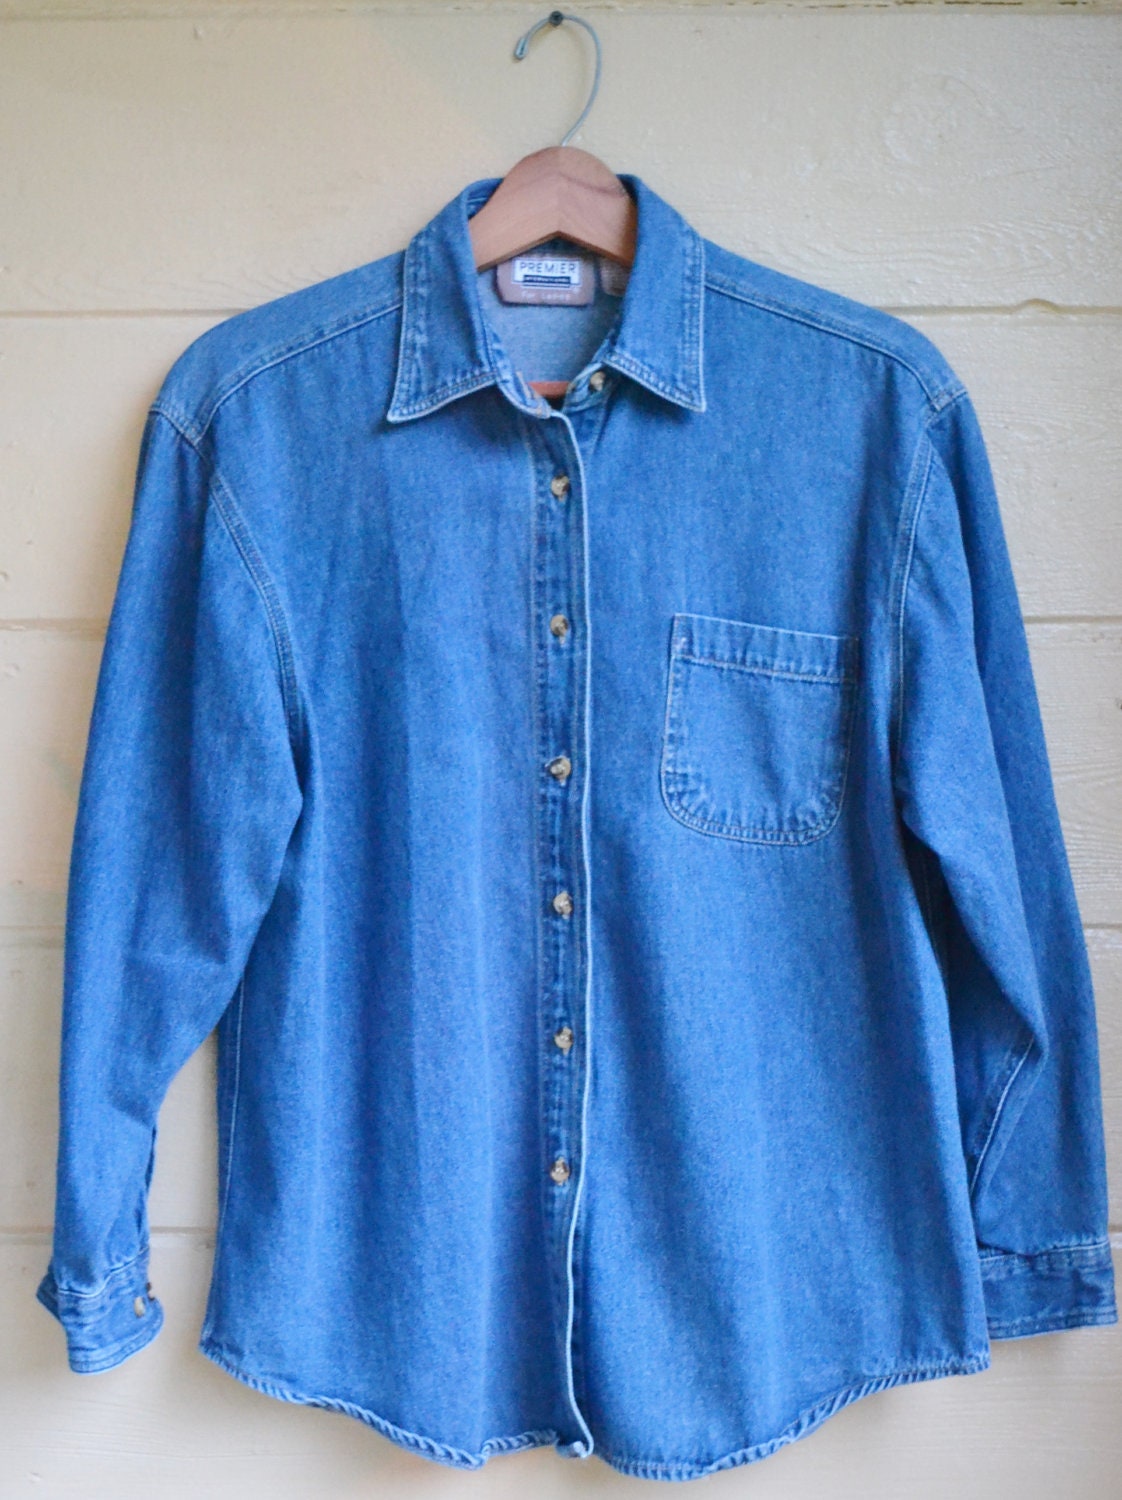 Vintage Womens Blue Denim Shirt Button up Blouse Shirt Jean